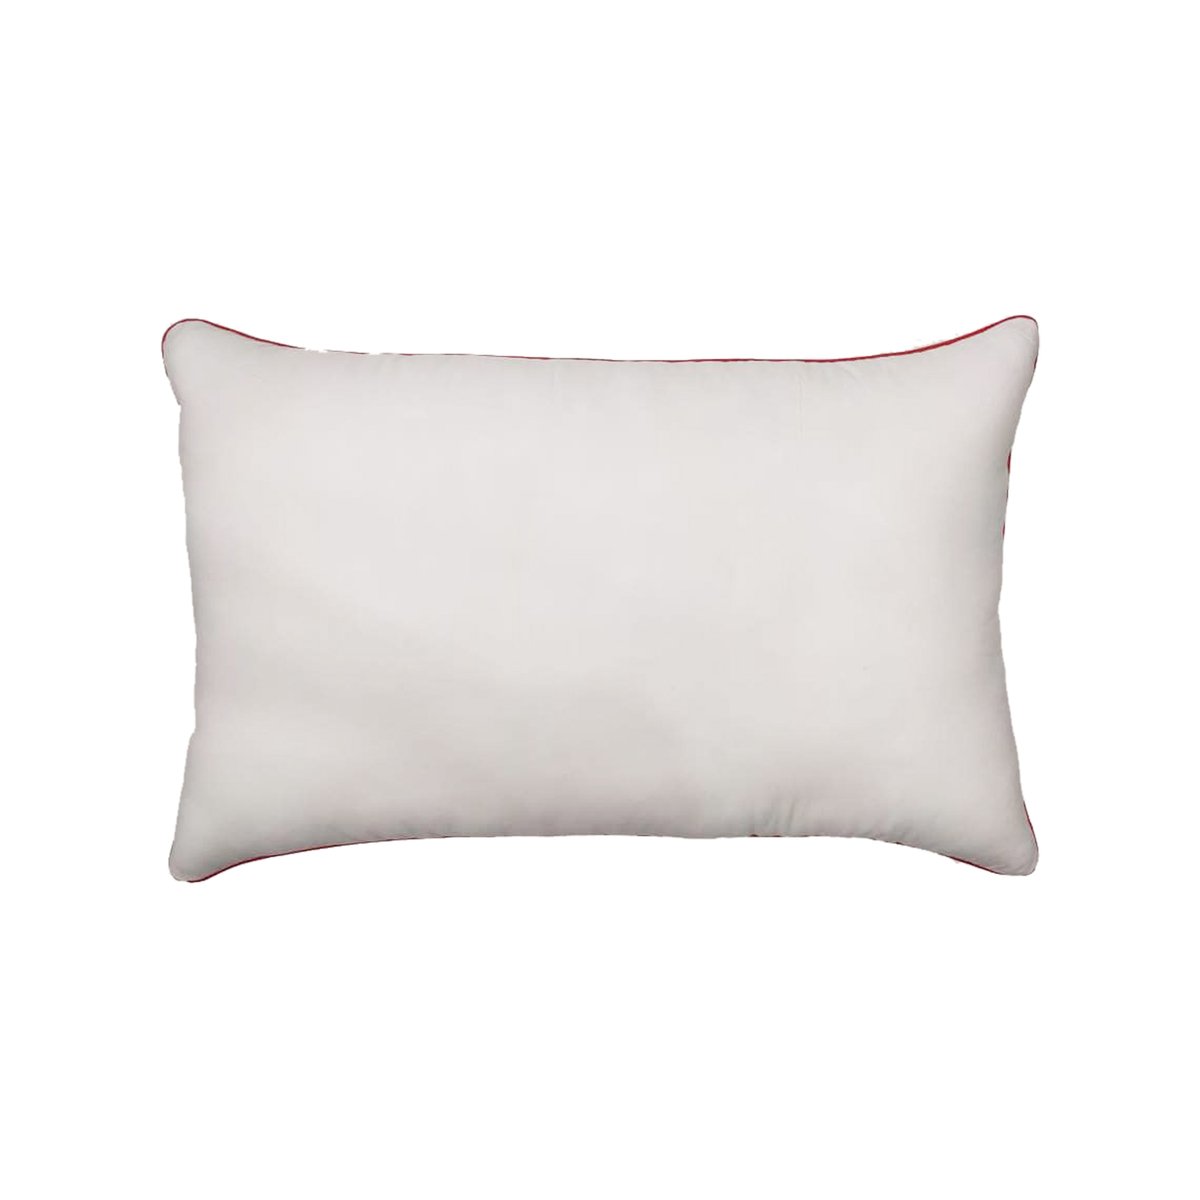 Arrya MF Piping Pillow 1.2kg 17x27